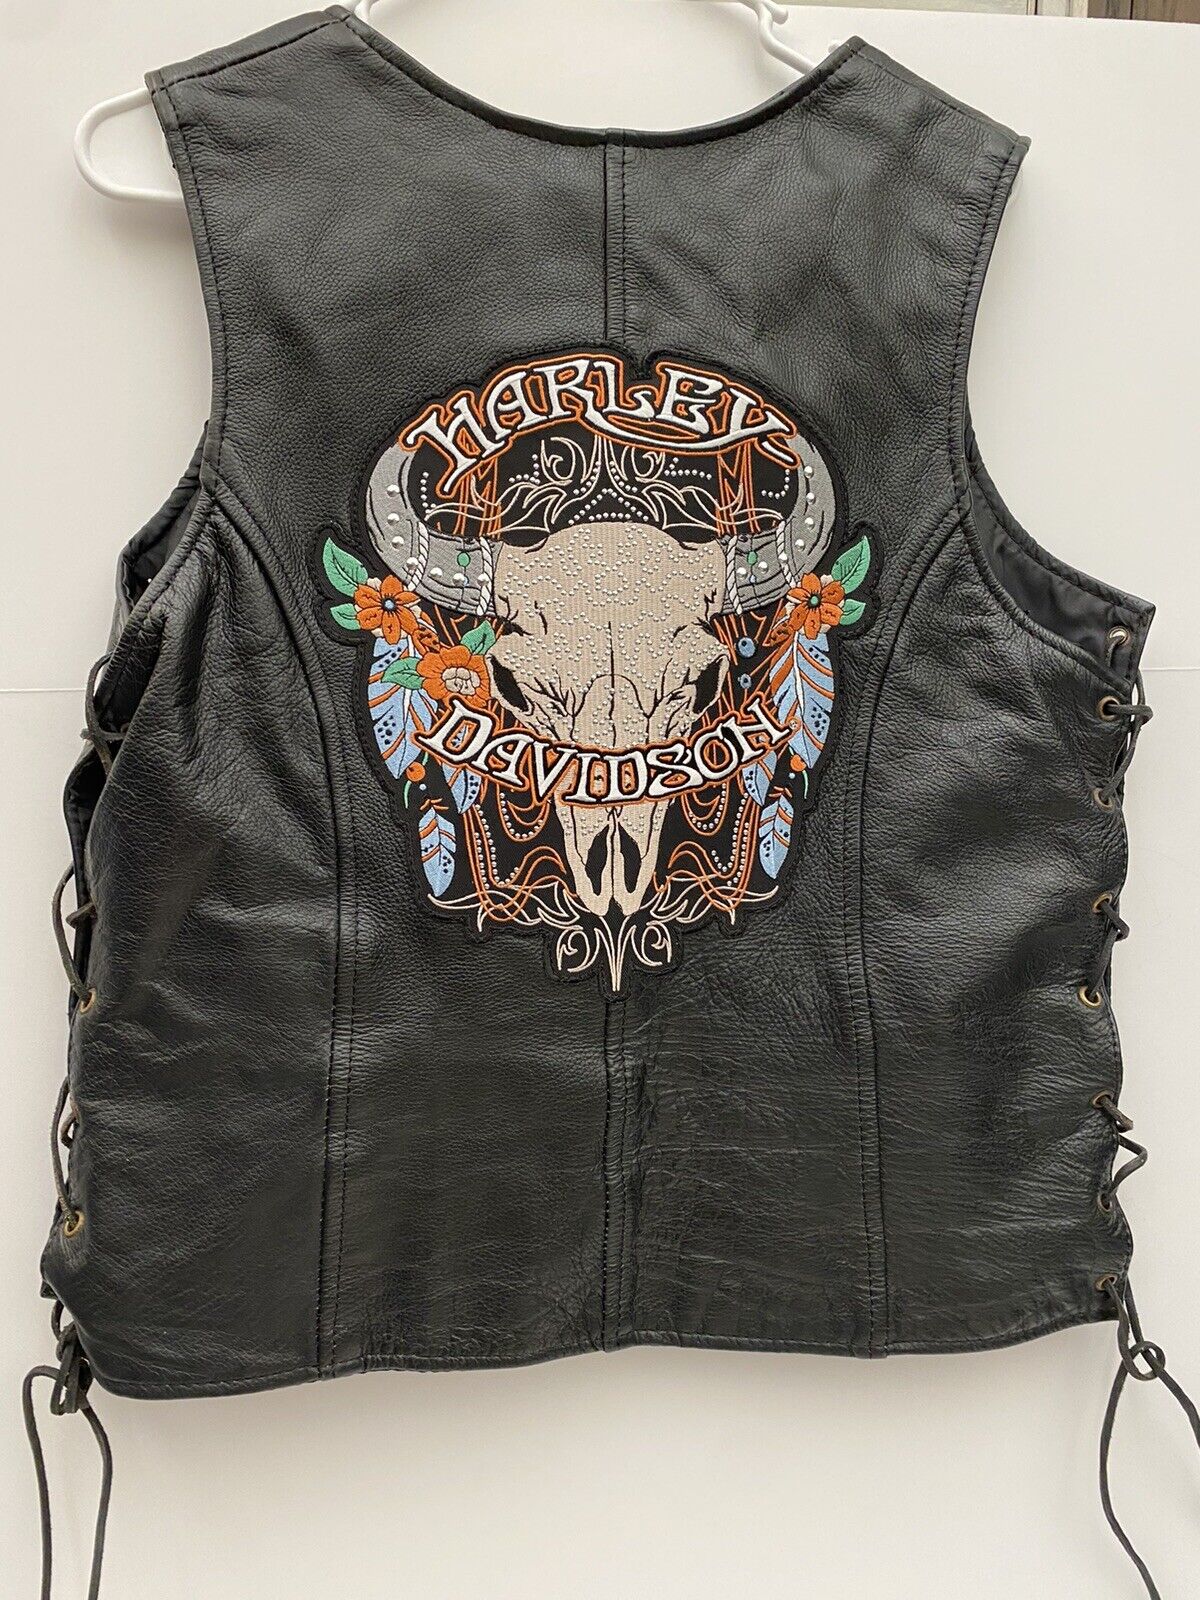 Unik Premium Black Leather Vest With Custom Harley Davidson Patch Adult Size M